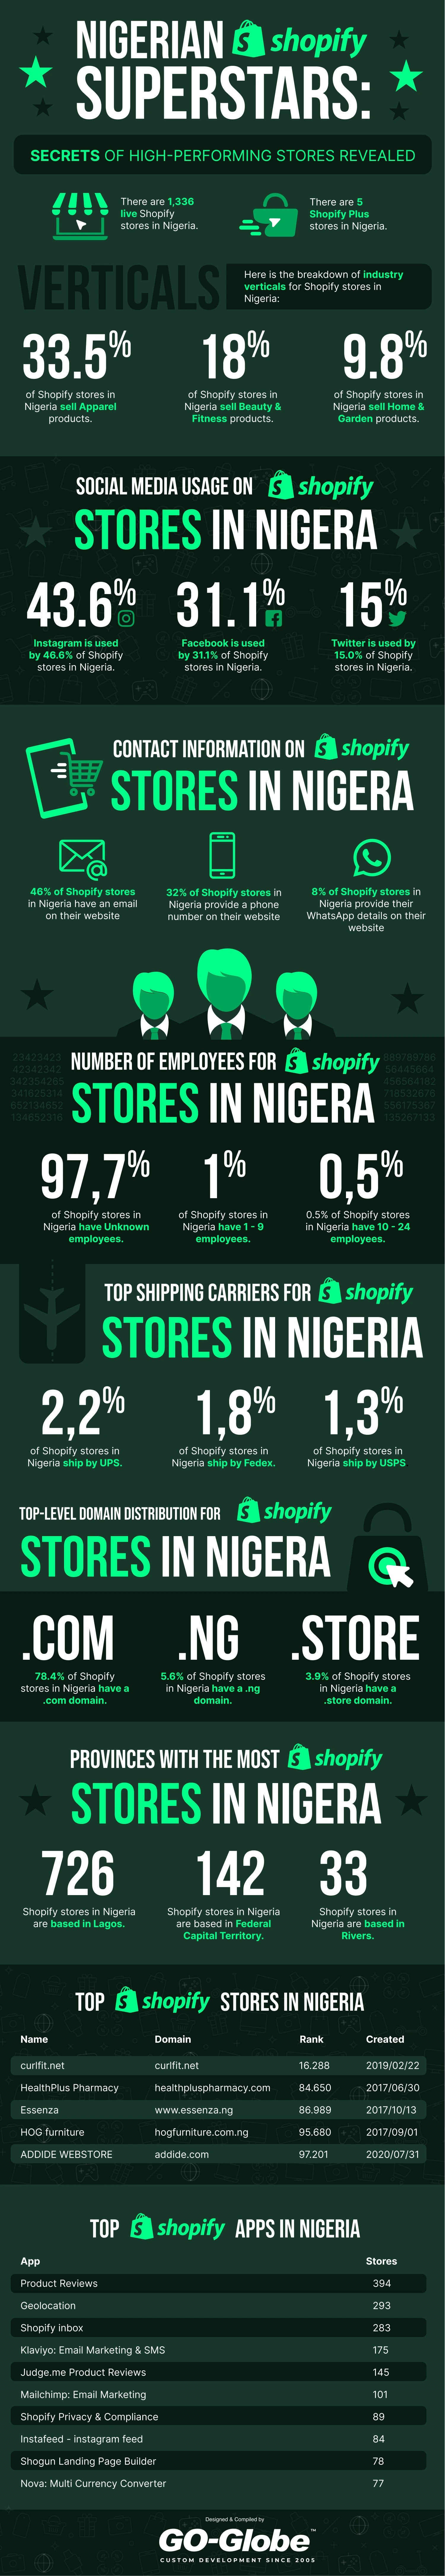 nigerian_shopify_superstars